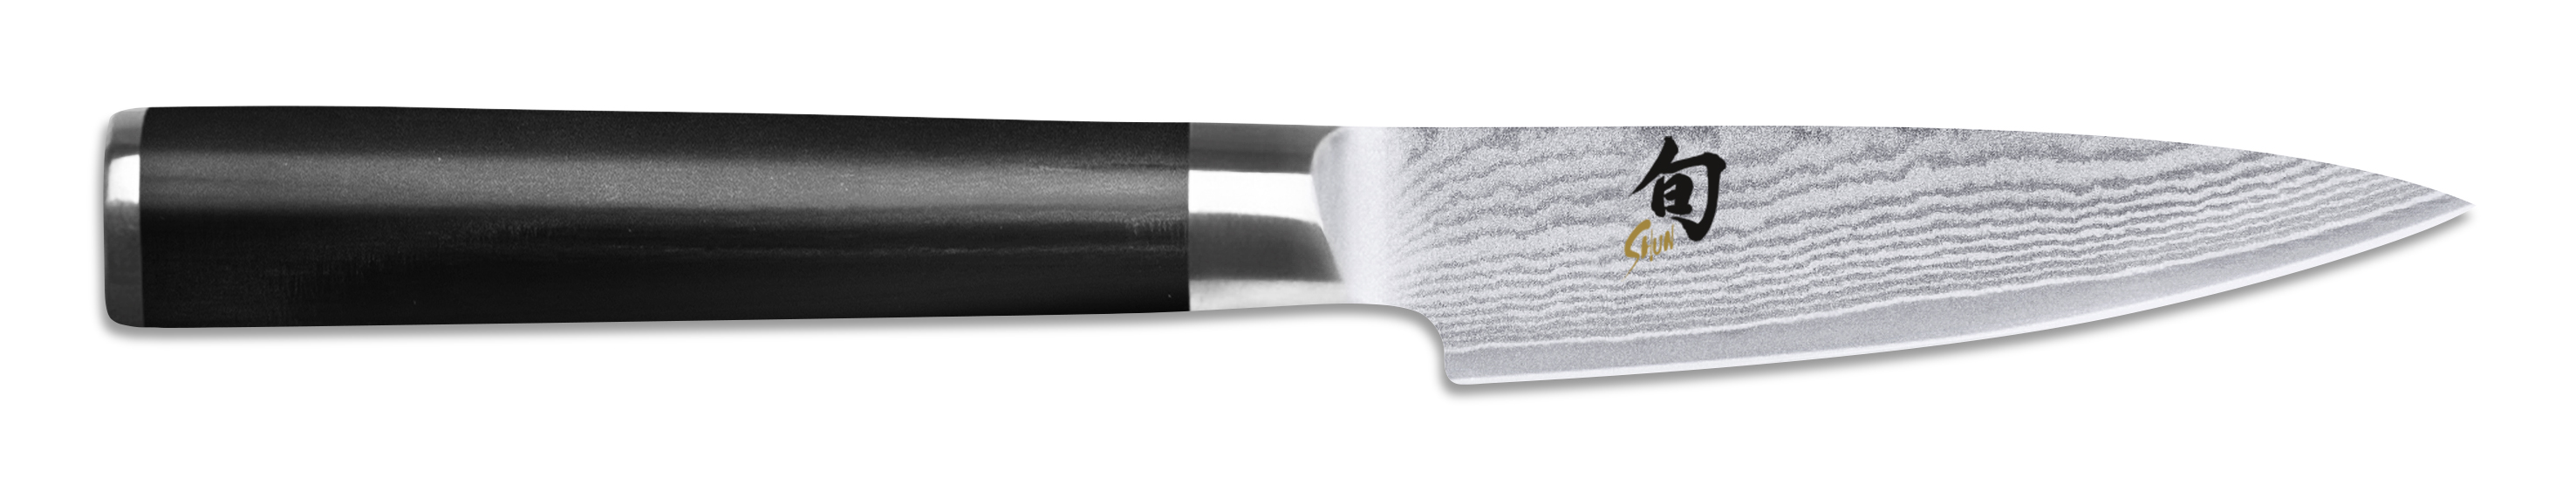 KAI - DM-0700: SHUN Kochmesser/Cook Knife Office Knife 3,6 (9,0 cm)